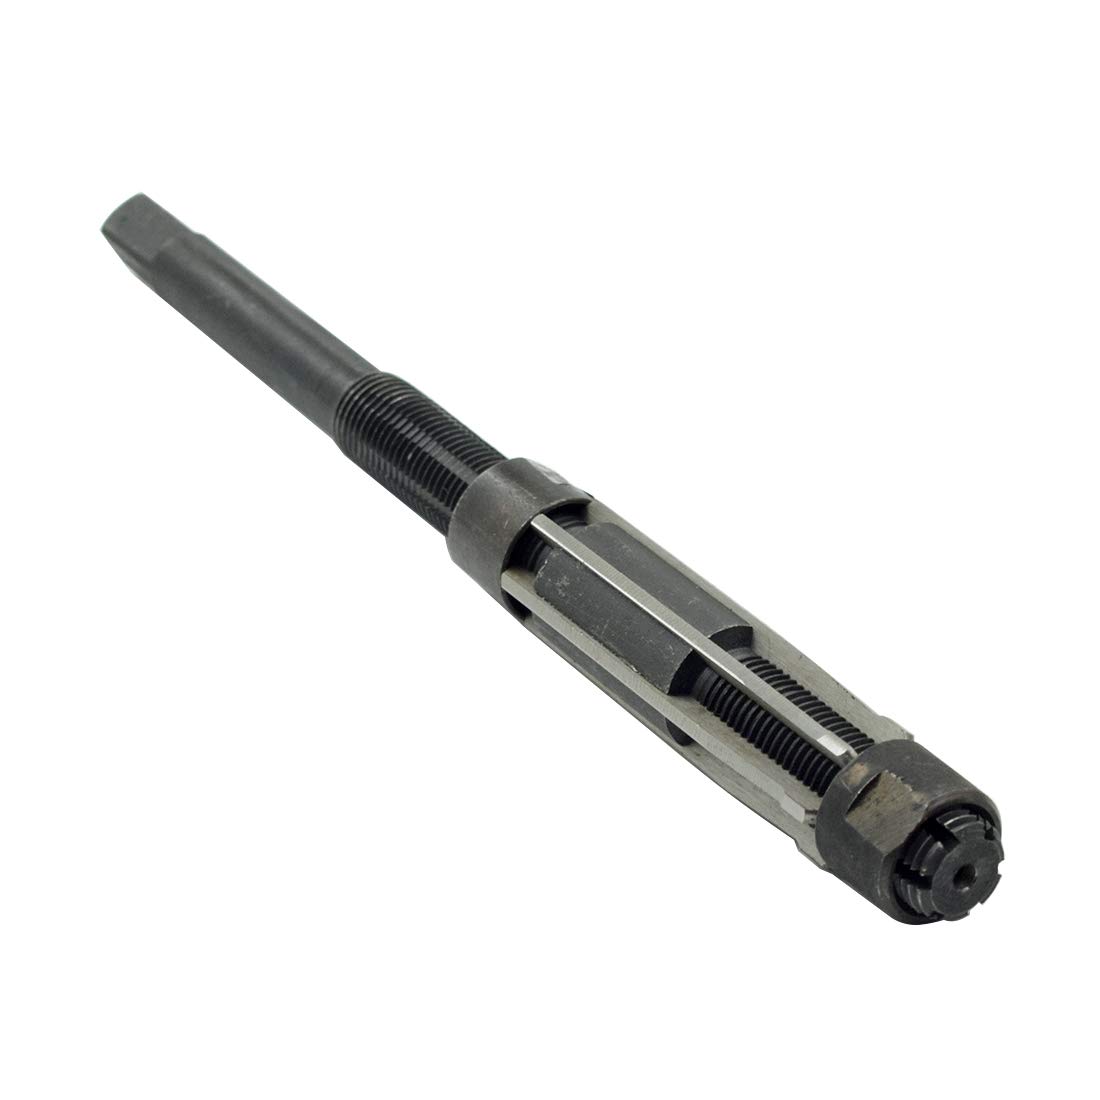 Rannb Adjustable Hand Reamer Square End Hole Cutting Tool Adjustment Range 17-19Mm